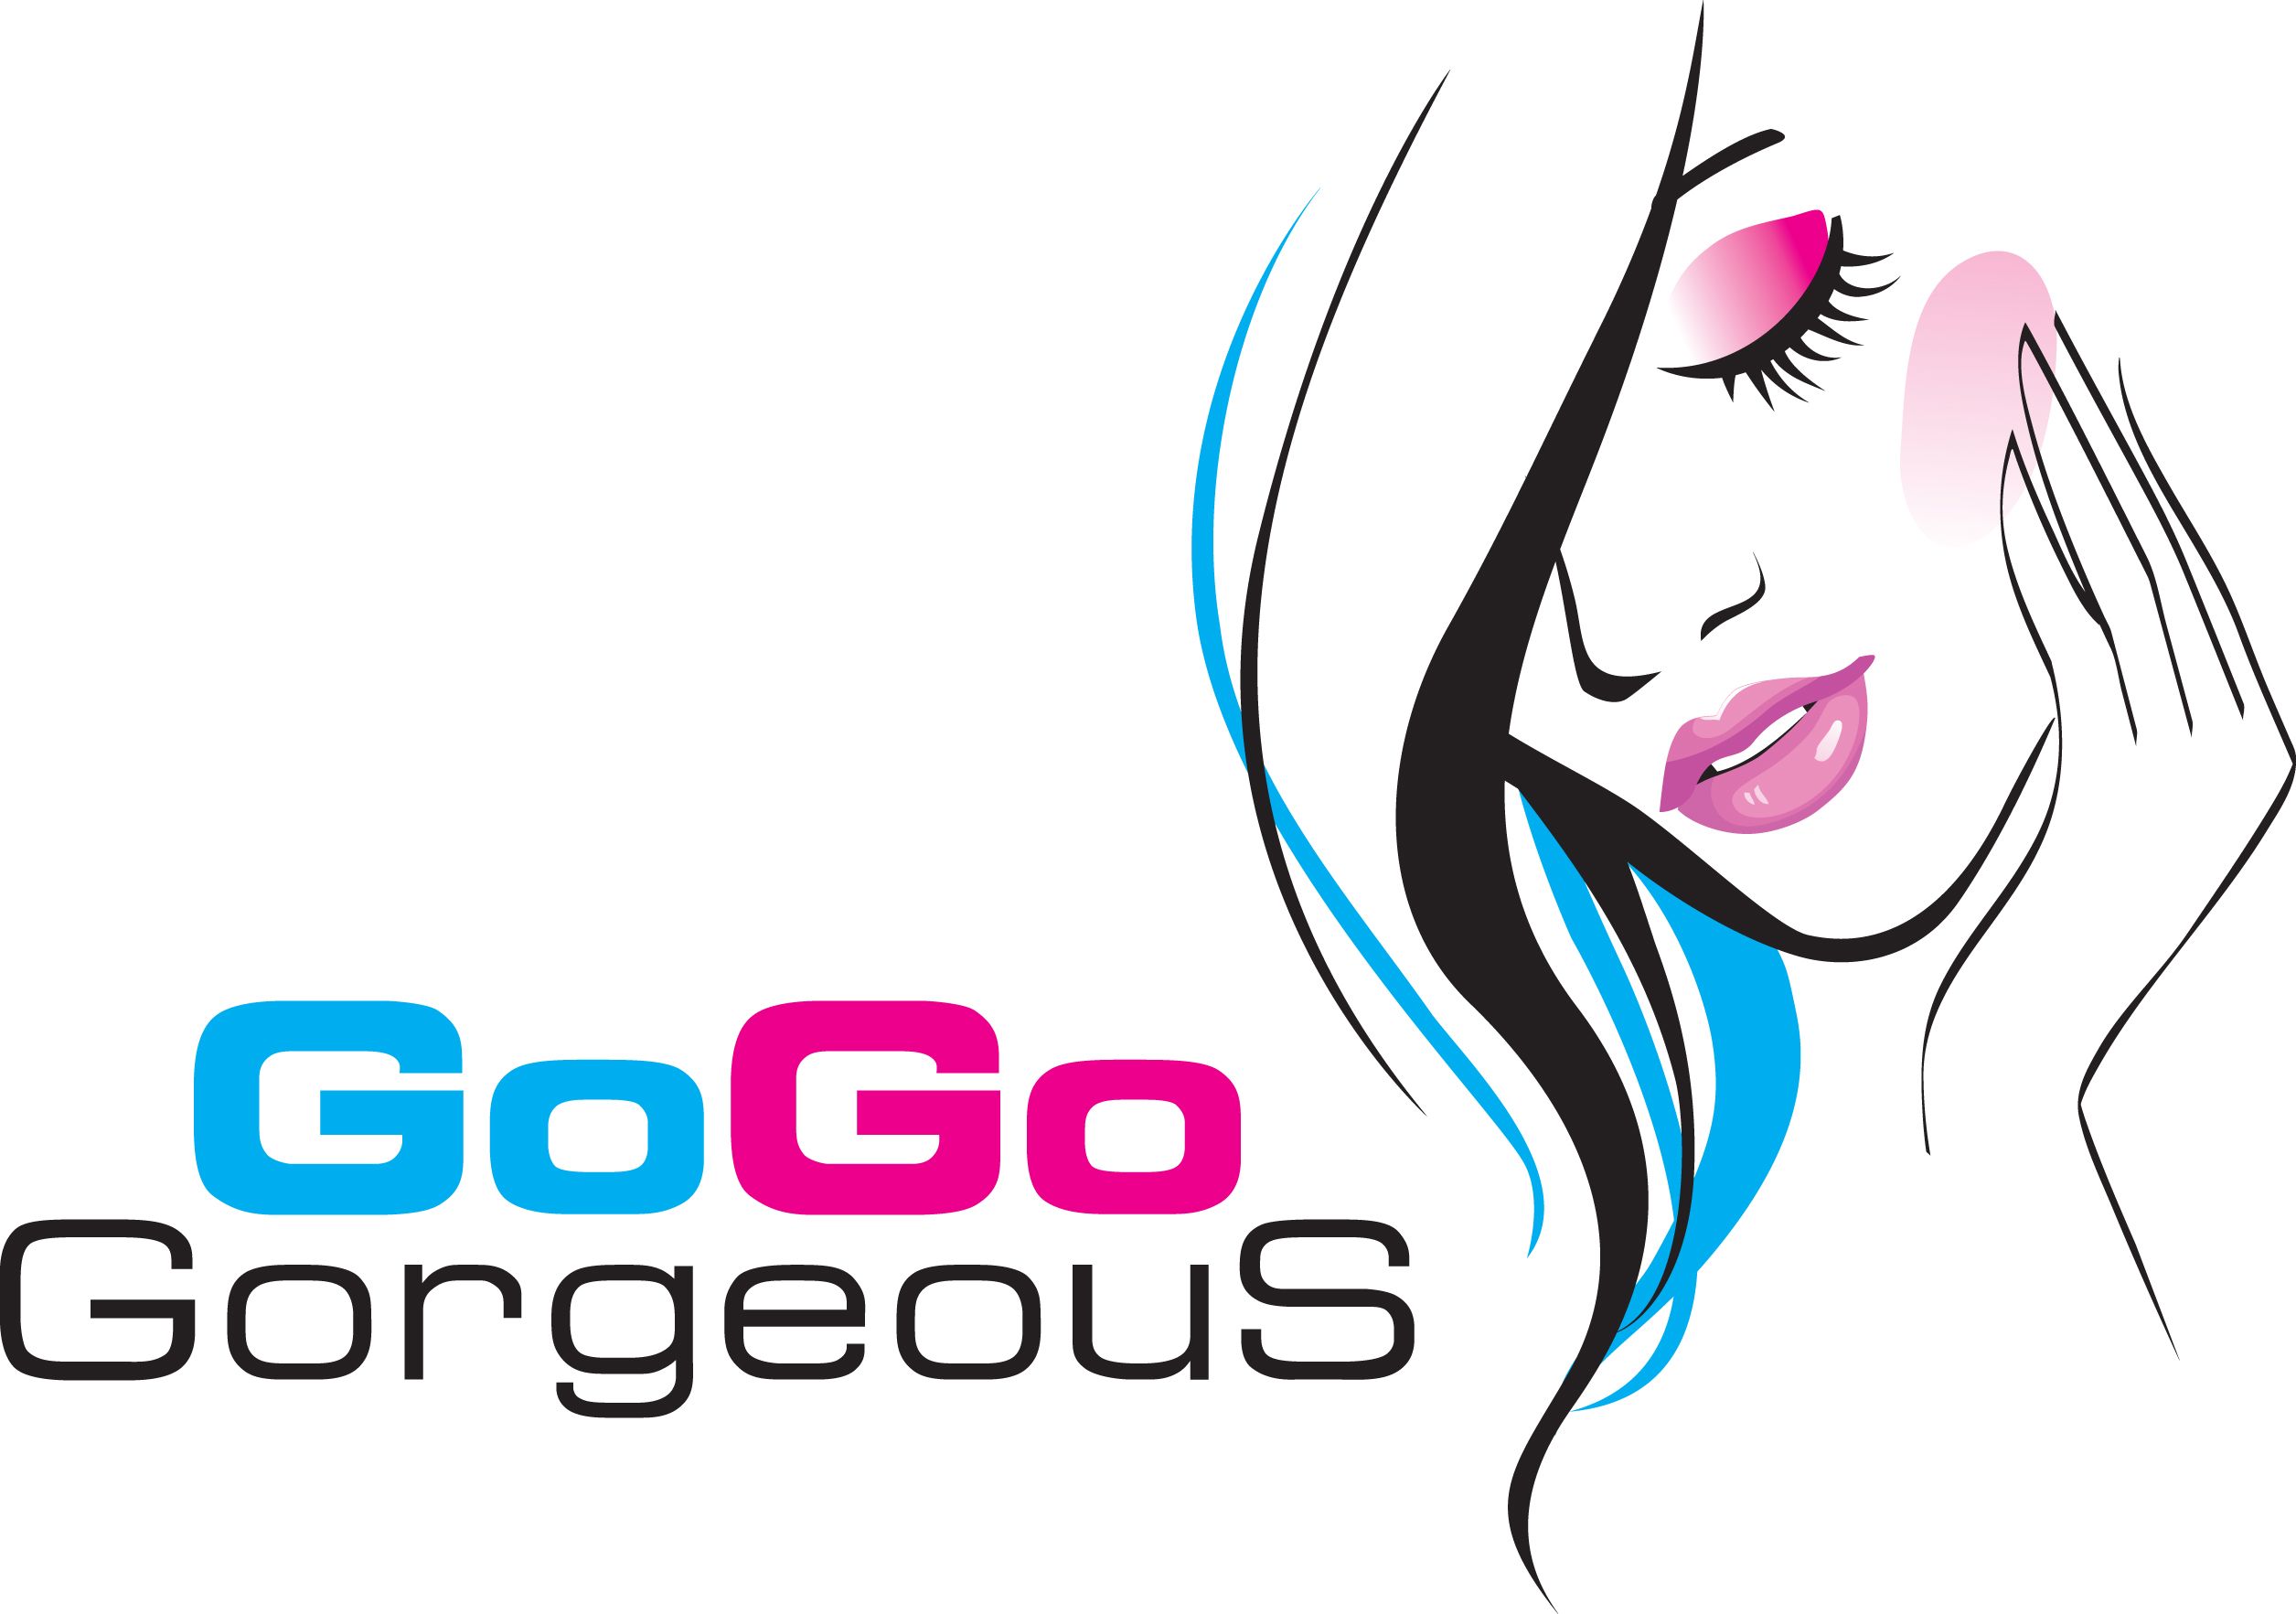 Salon logos graphics create. Beauty clipart beauty therapist